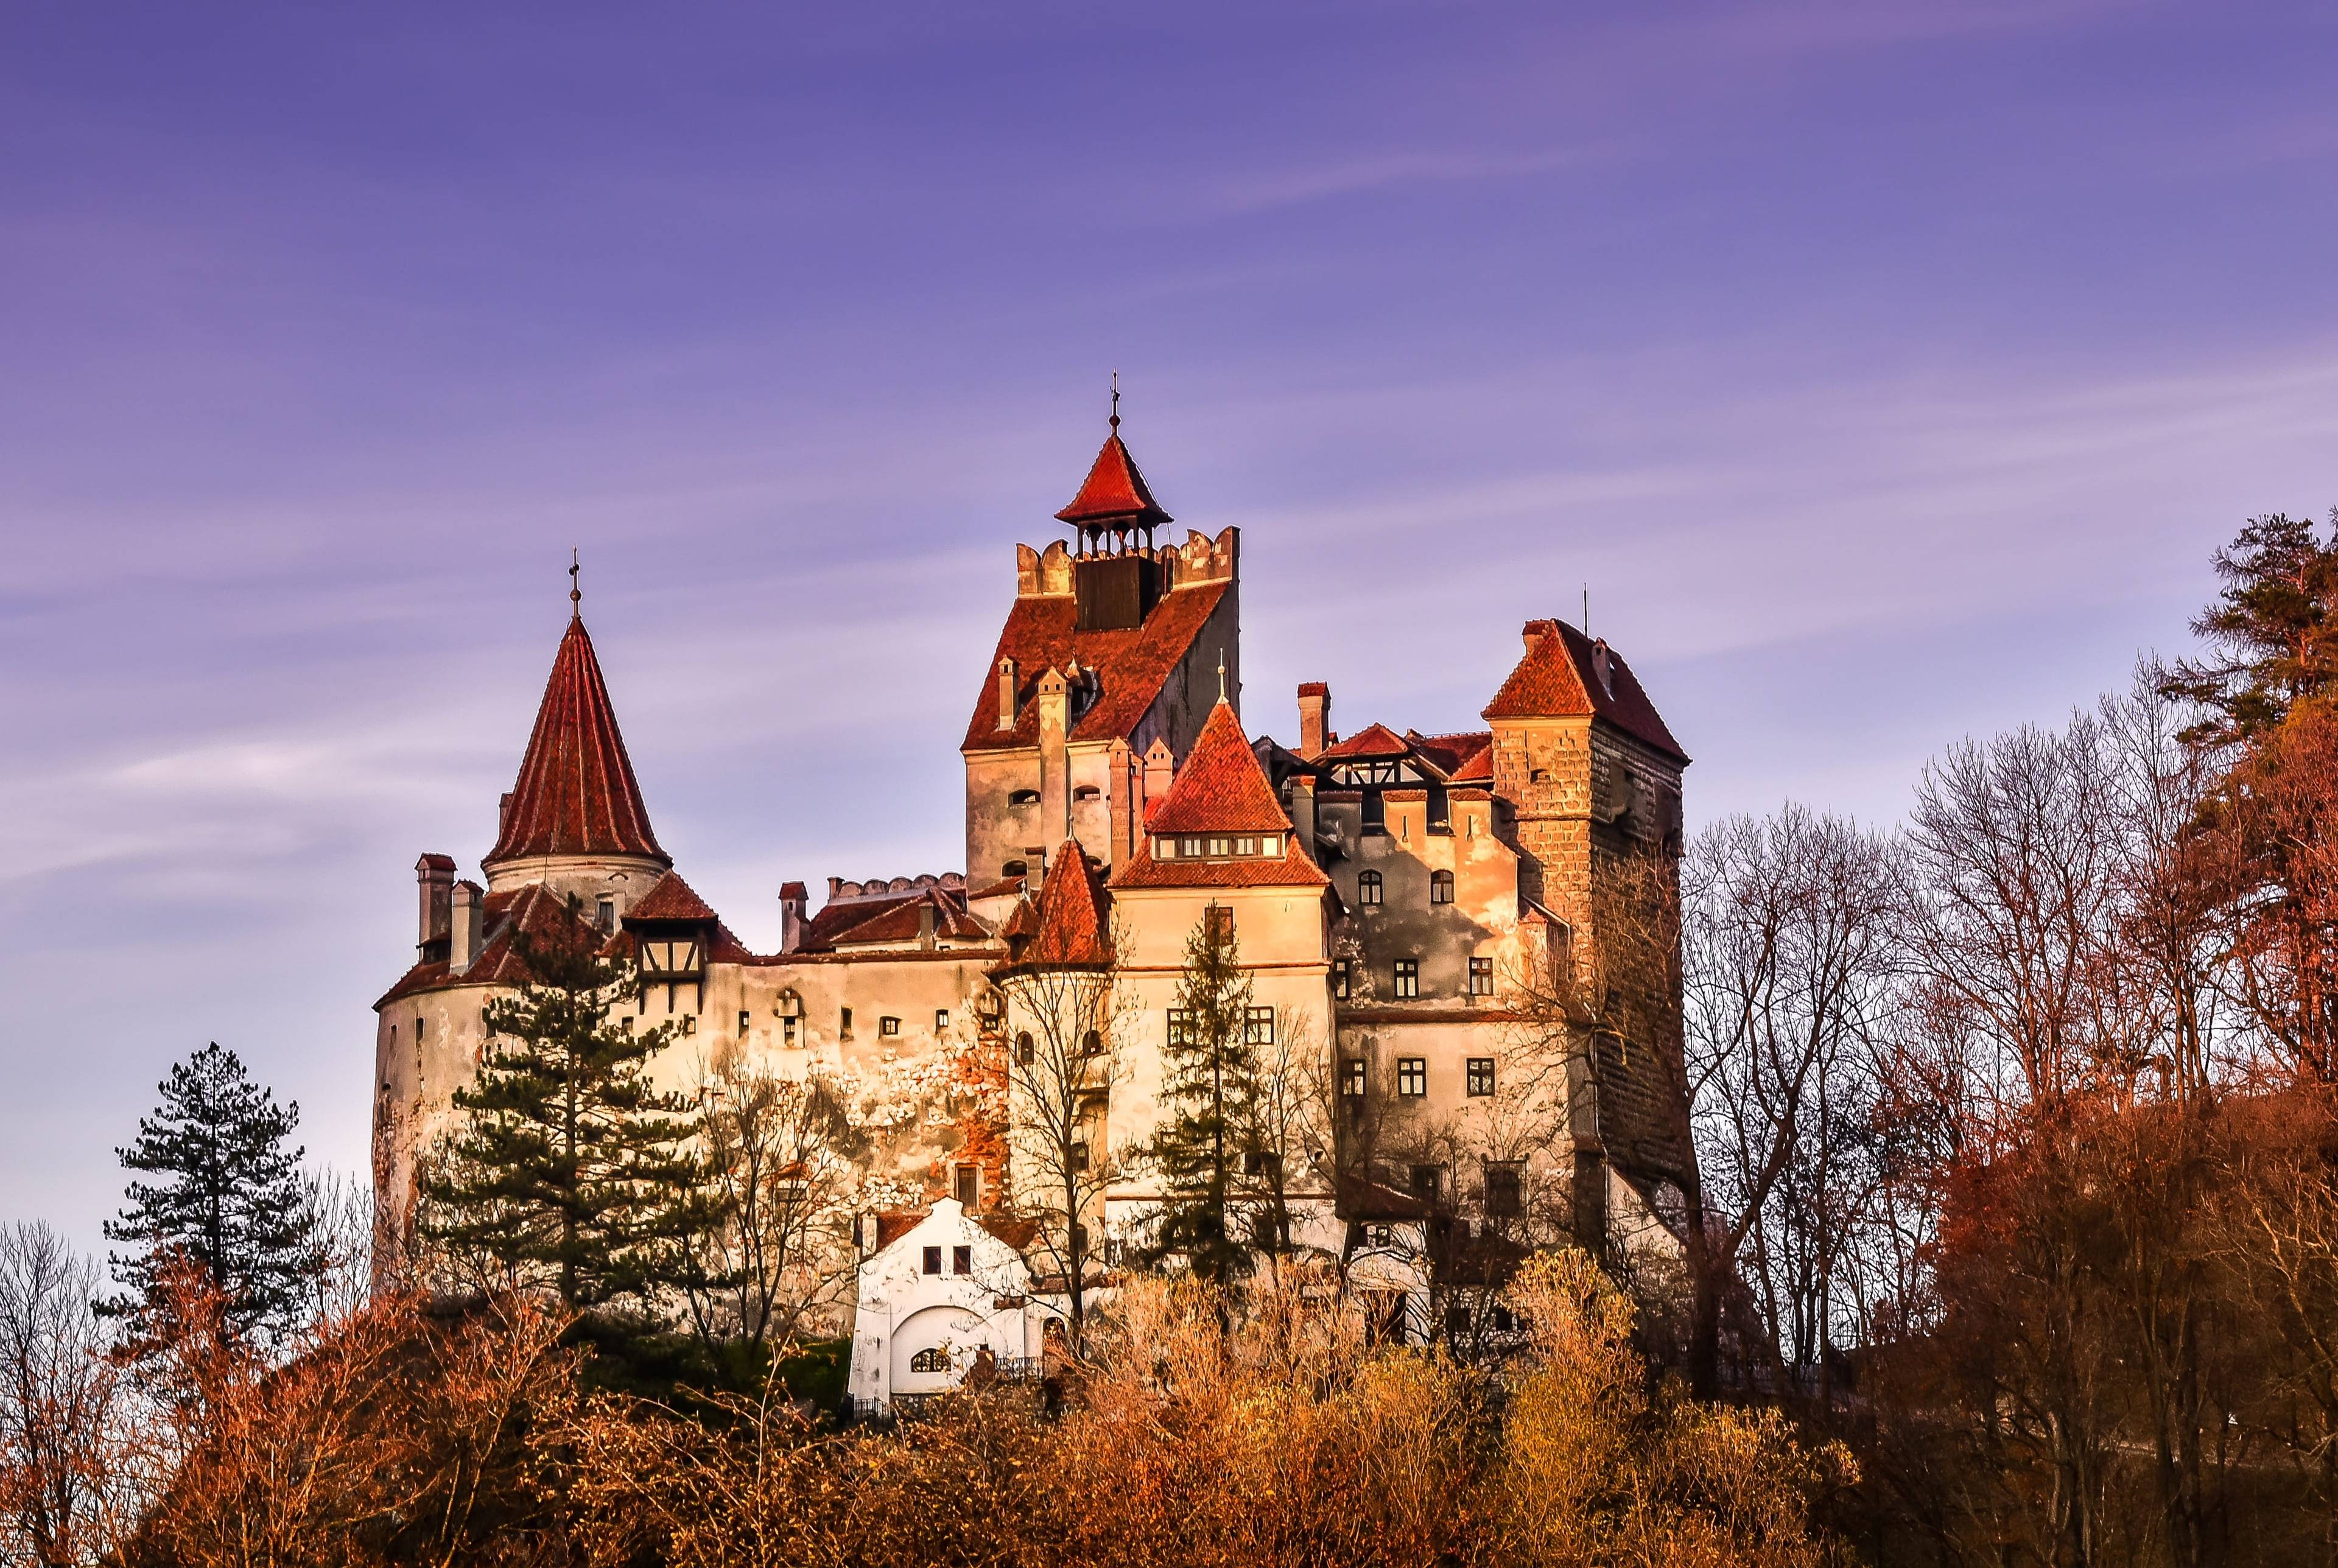 Take an Awesome Trip Through Beautiful Romania to the Home of Dracula